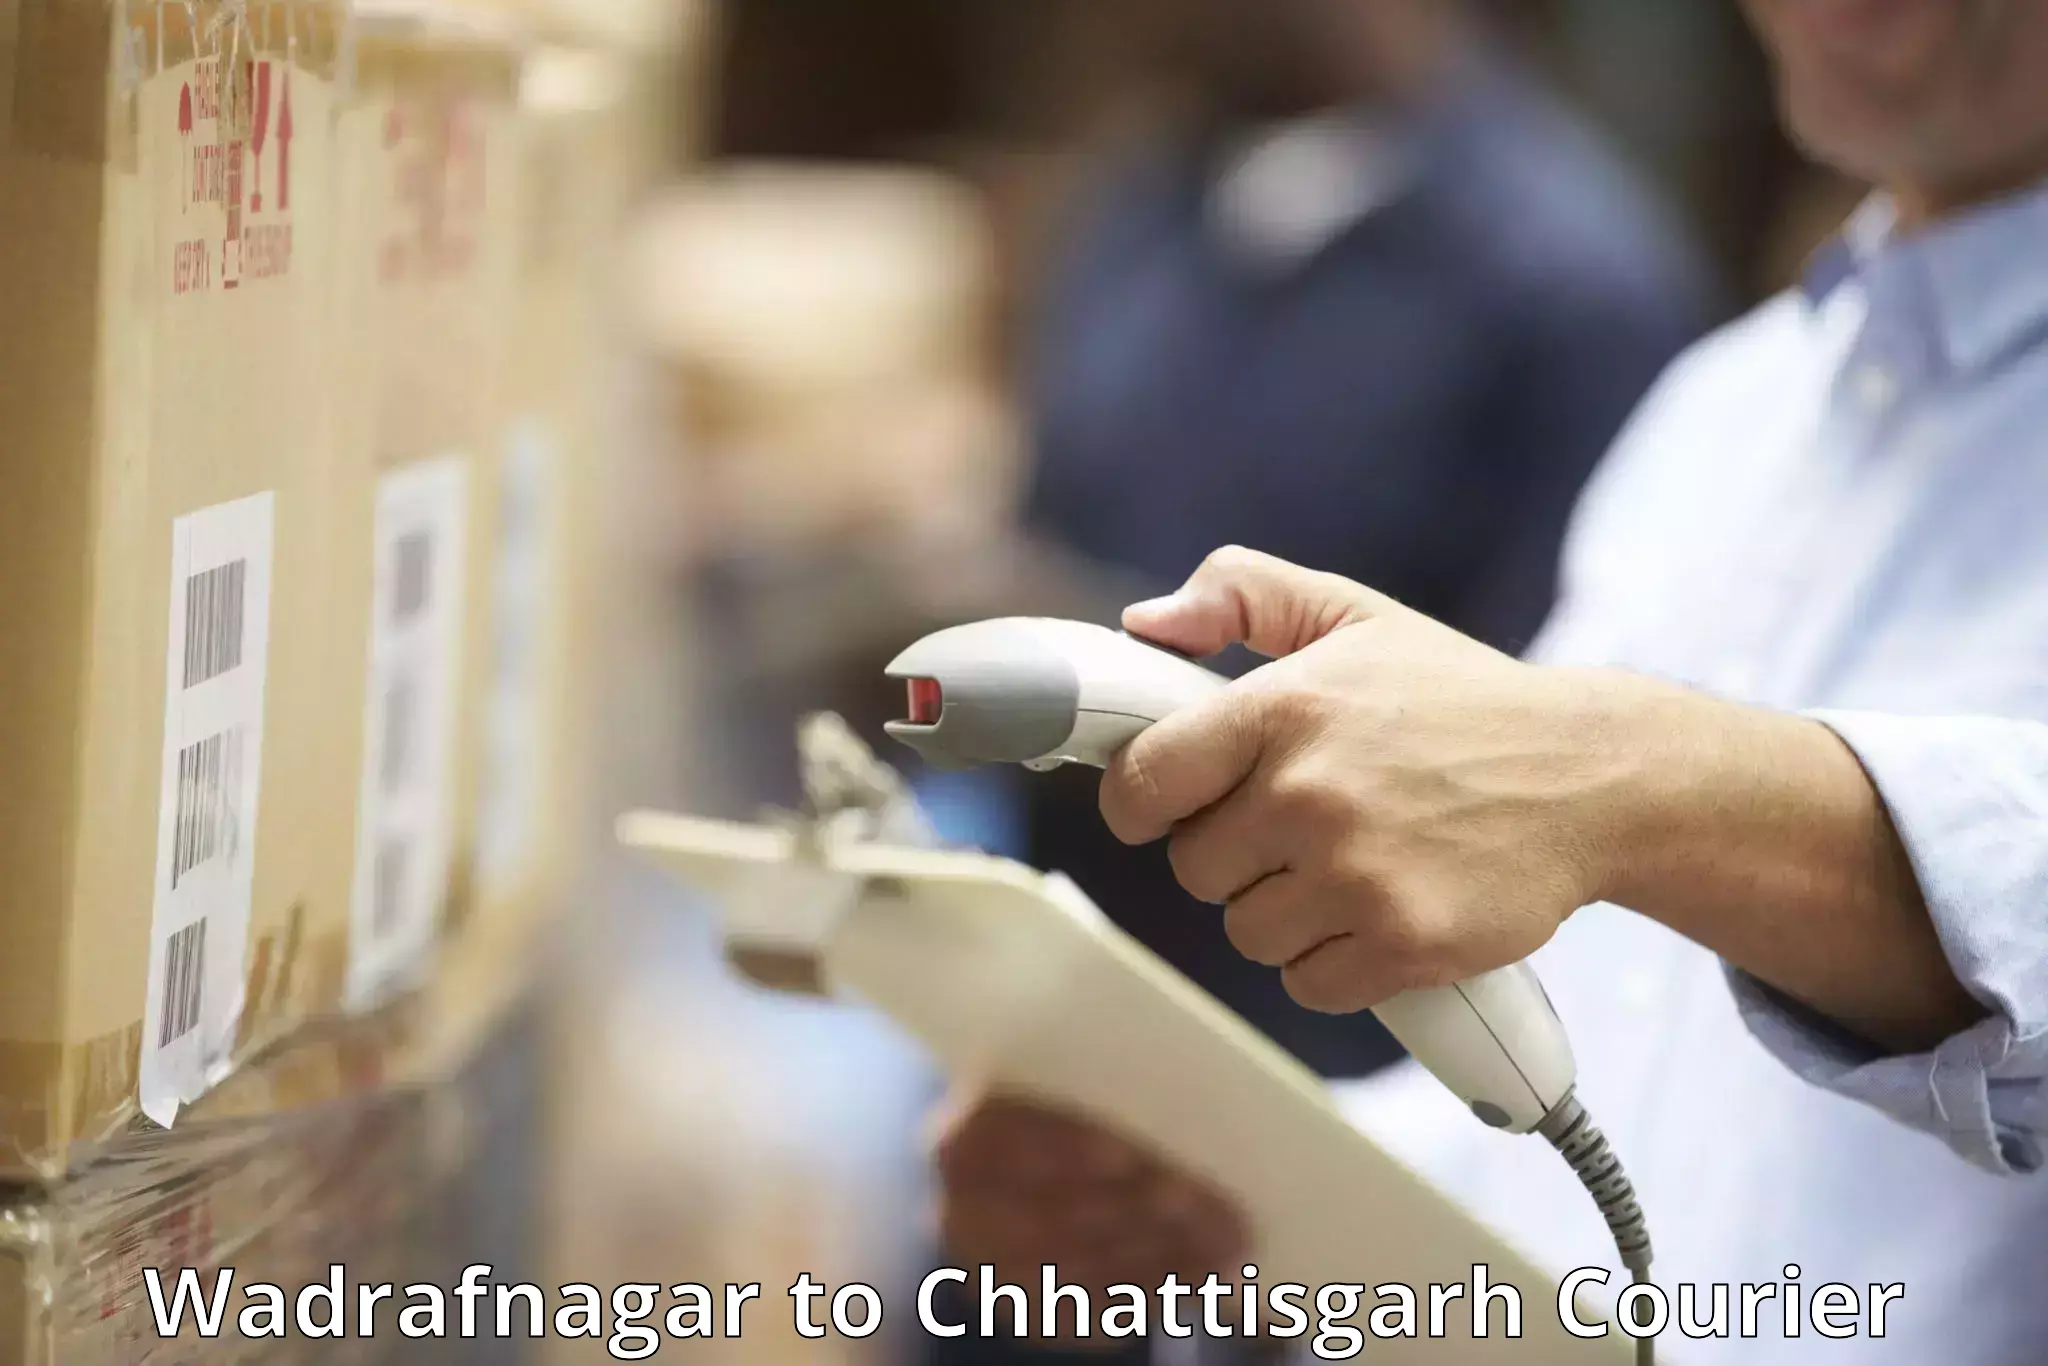 Luggage transport consultancy Wadrafnagar to Chhattisgarh